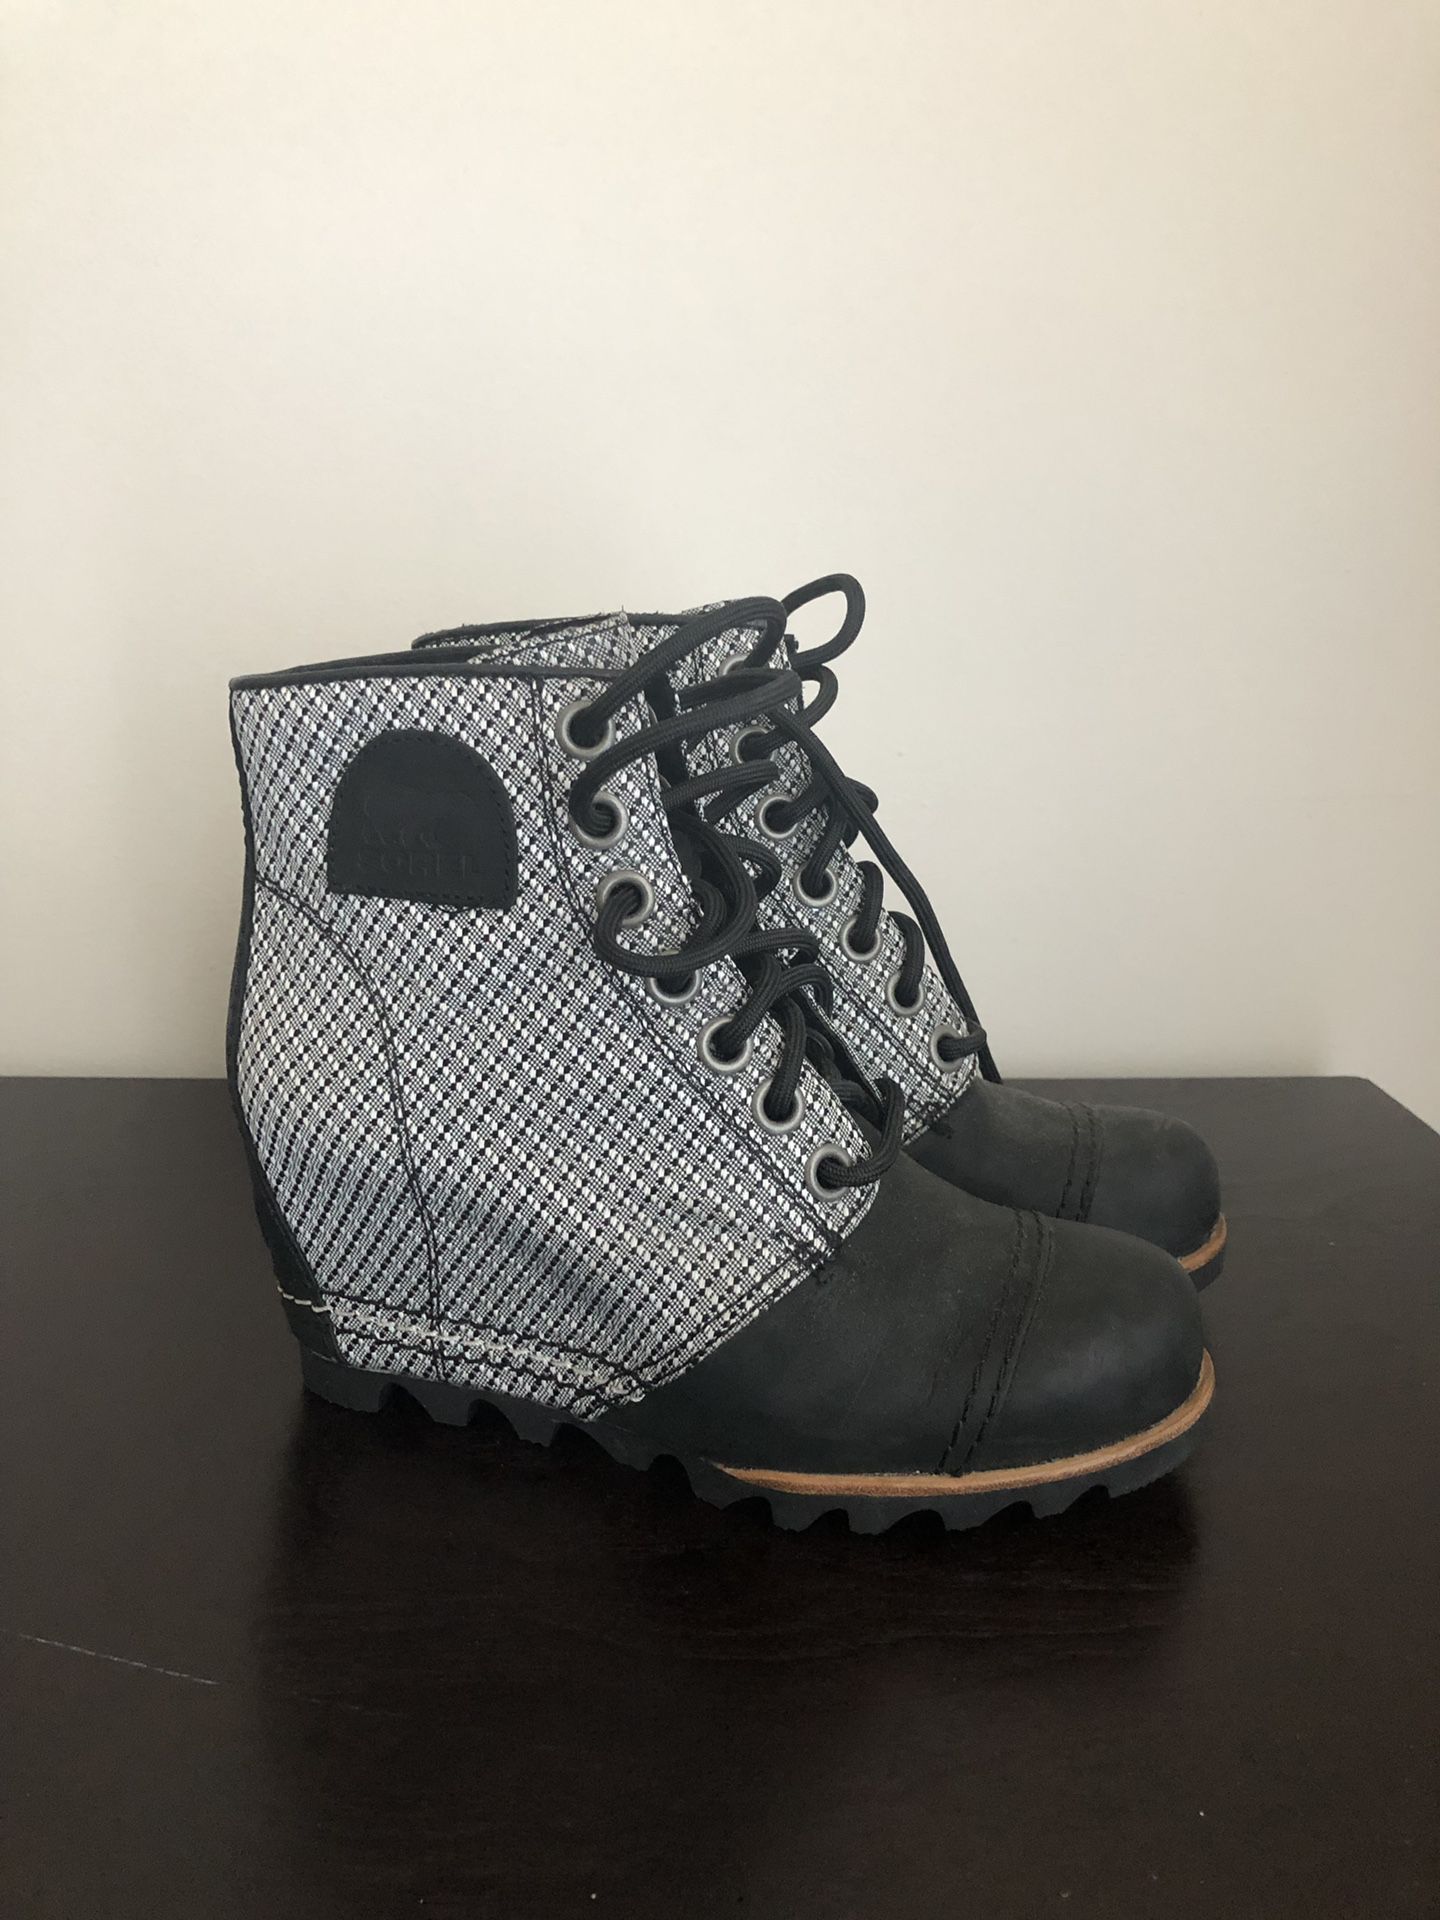 SOREL Wedge Boots - Women’s. Size 6